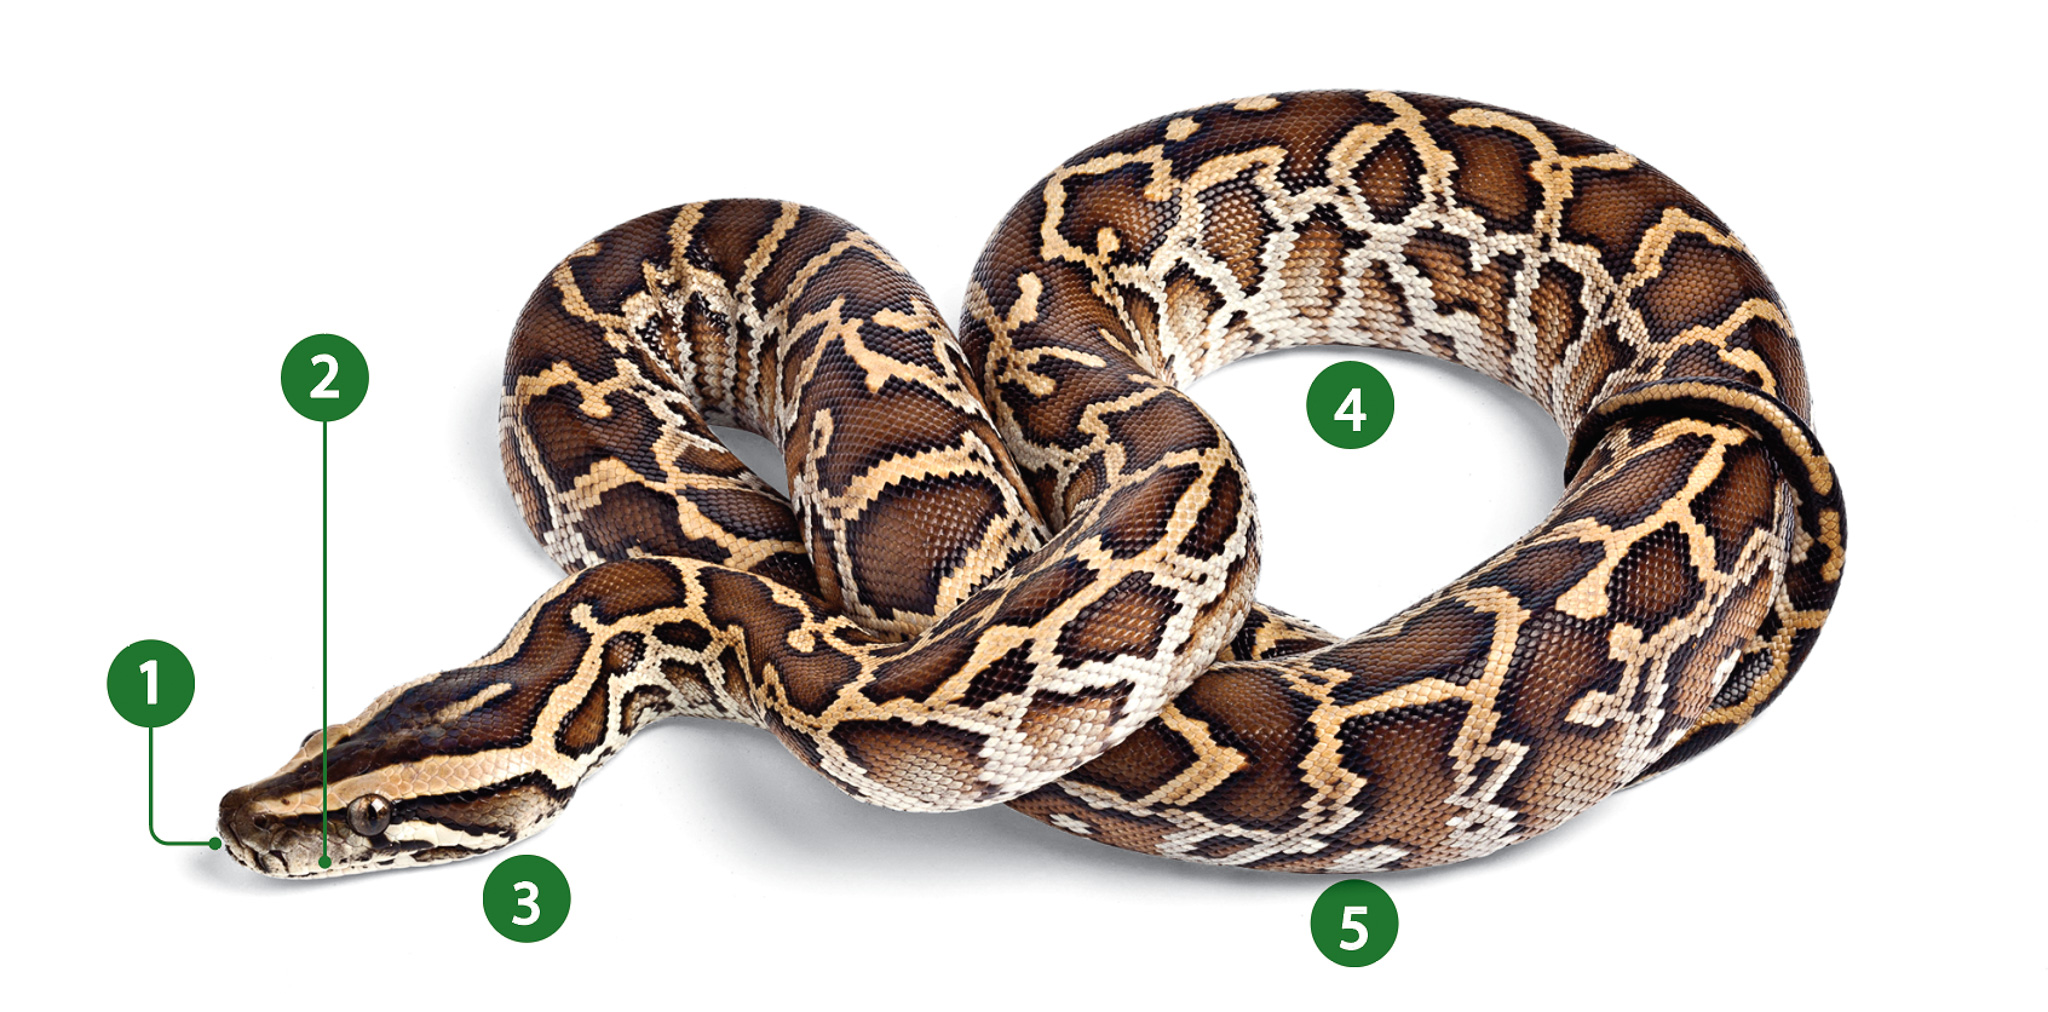 Identifying characteristics of a Burmese python.